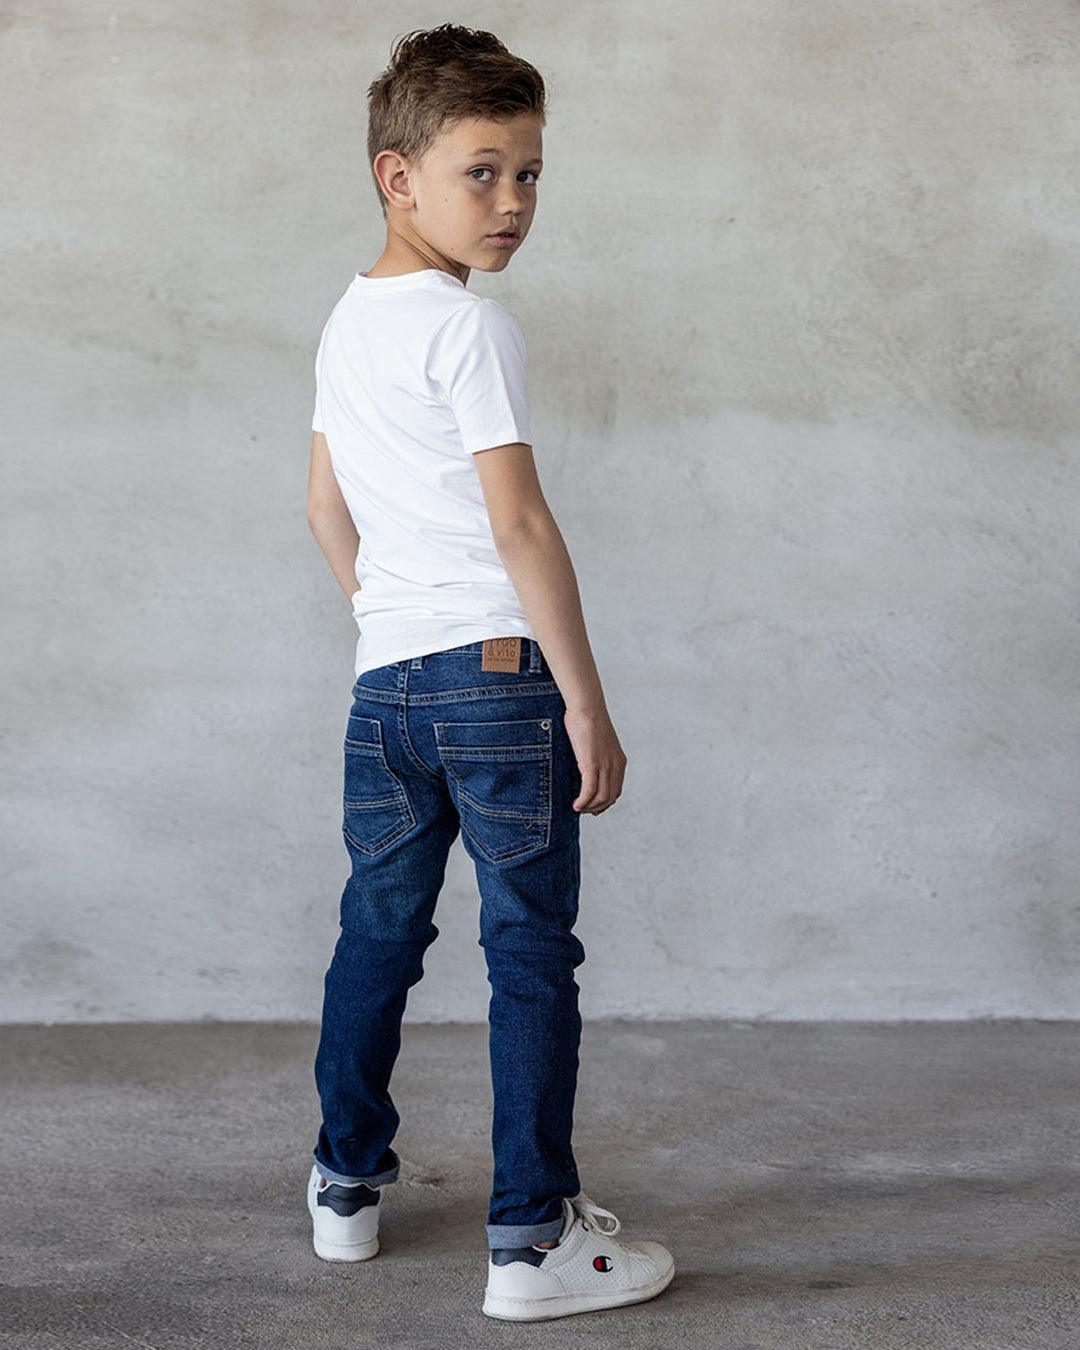 Skinny Fit jeans used Dark Used - TYGO&vito